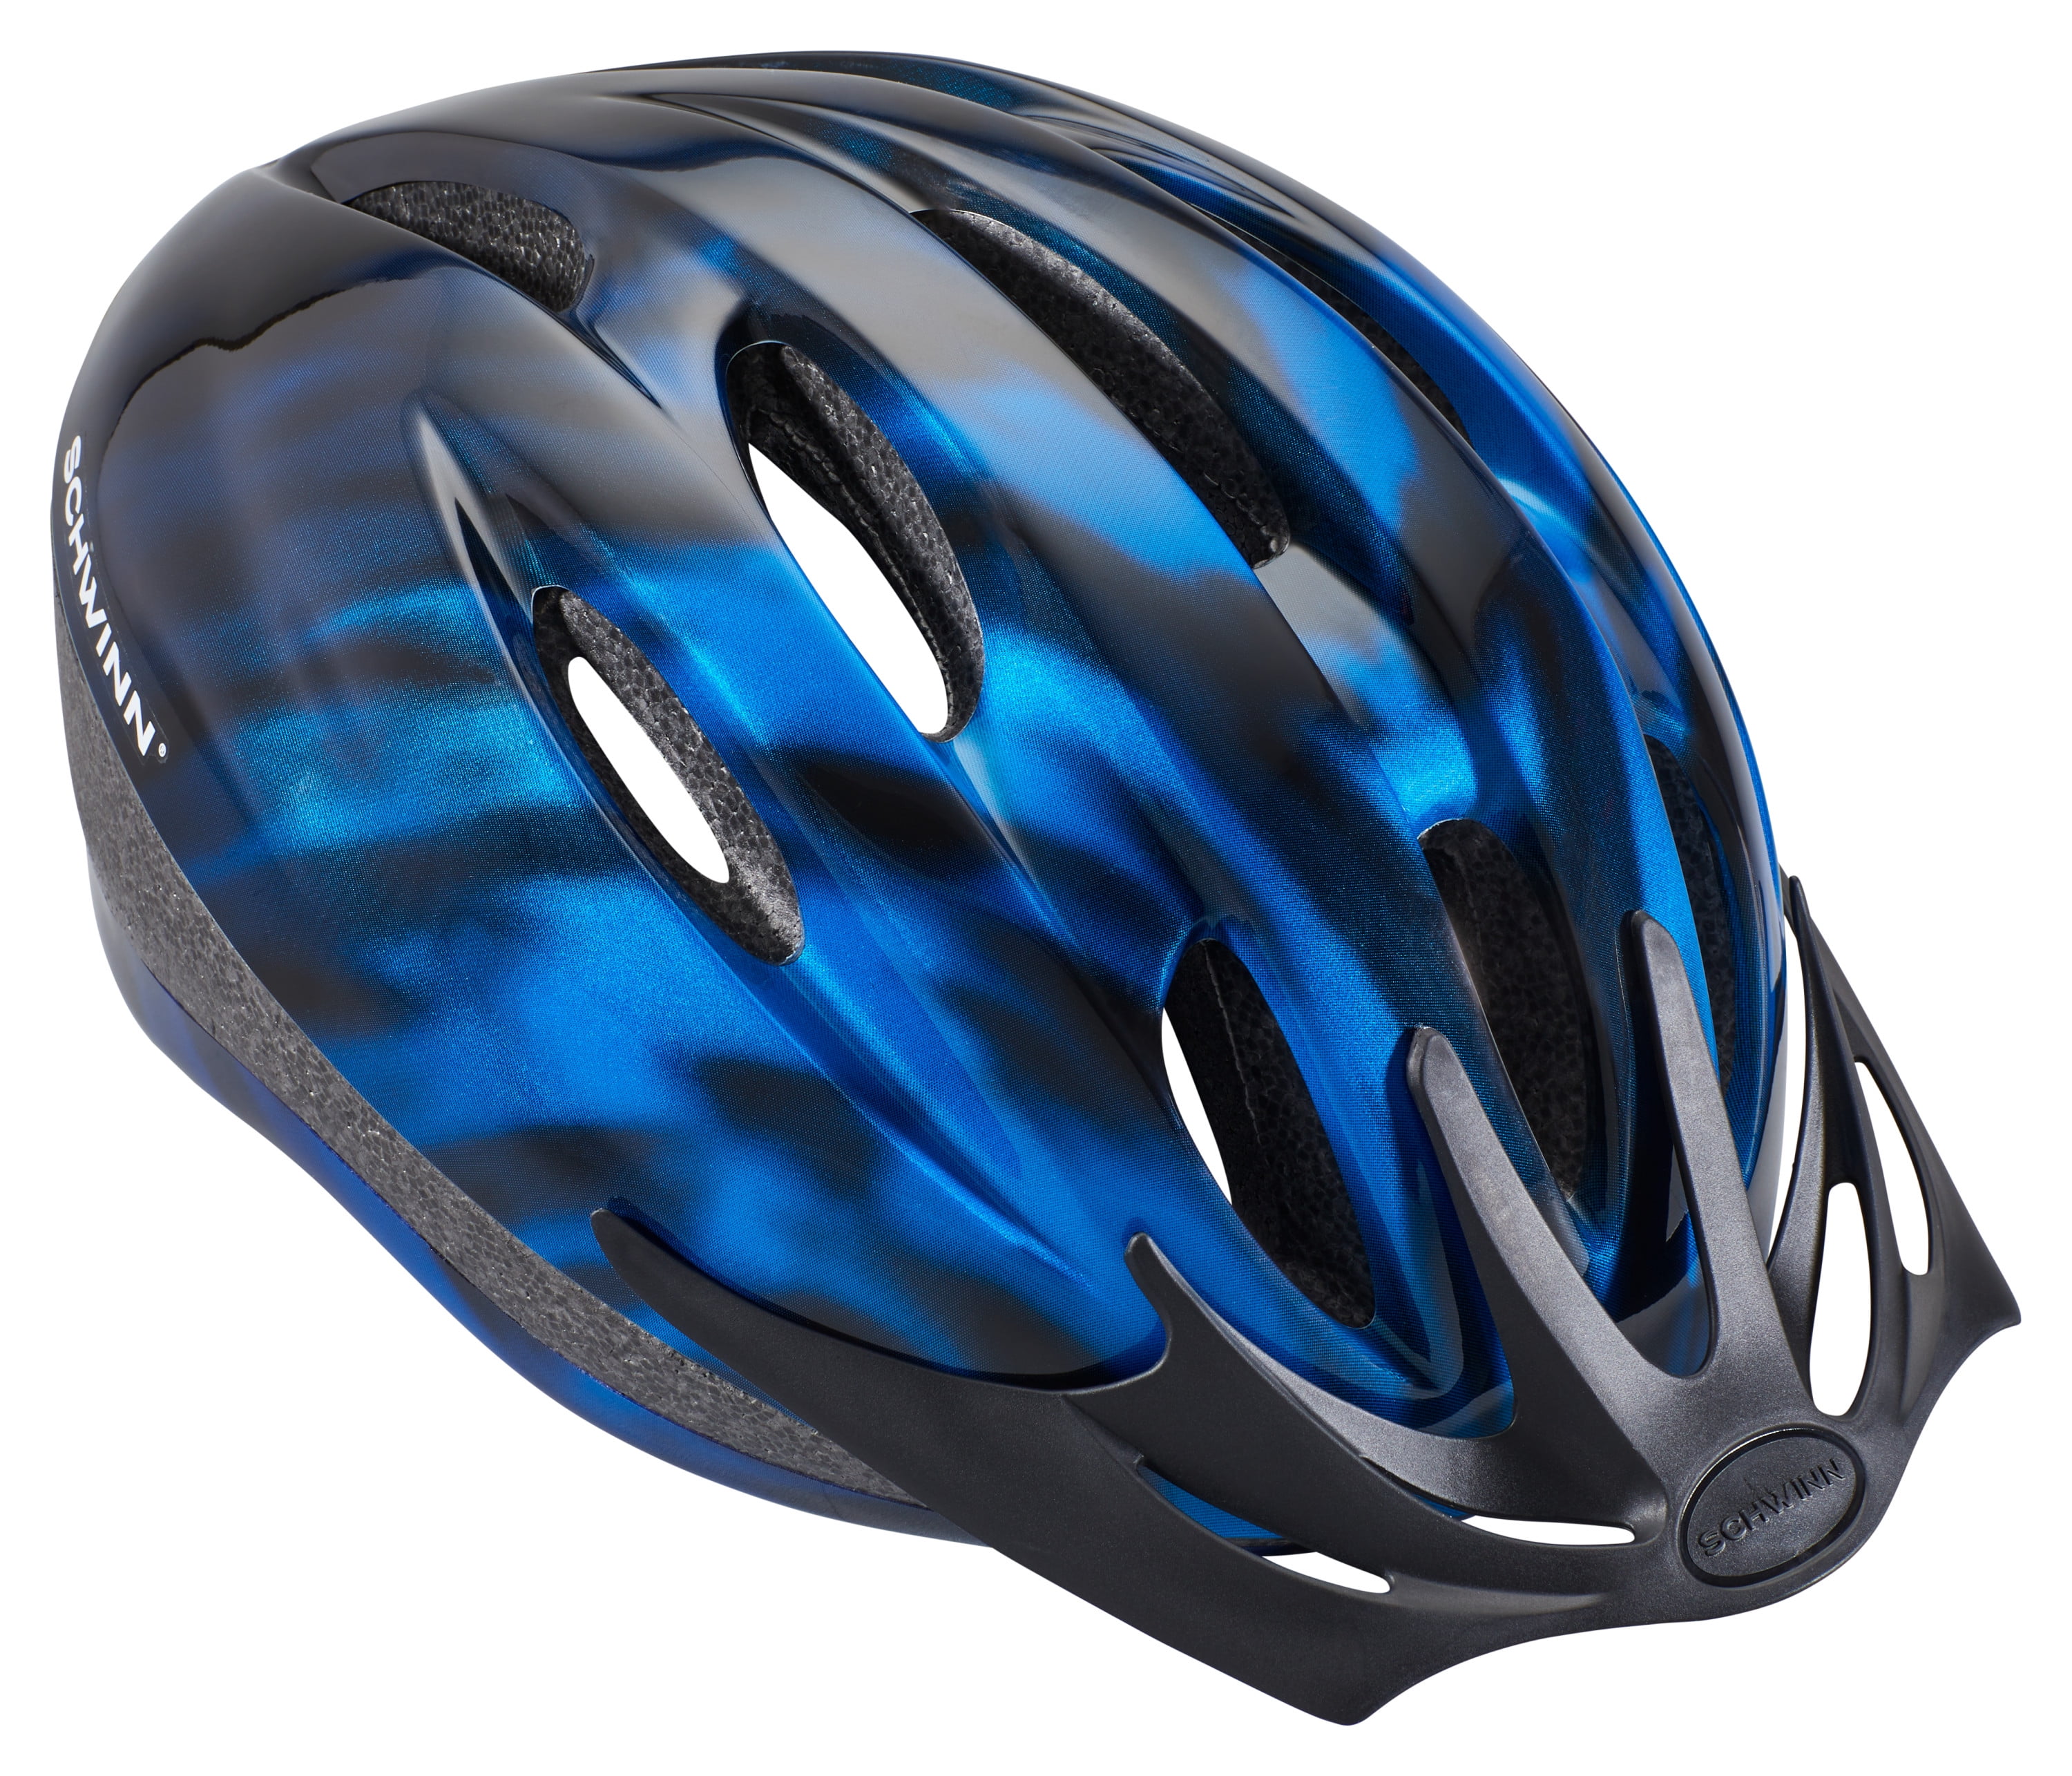 New Schwinn Intercept Adult 14 Bicycle Bike Helmet 360 comfort padded vented 